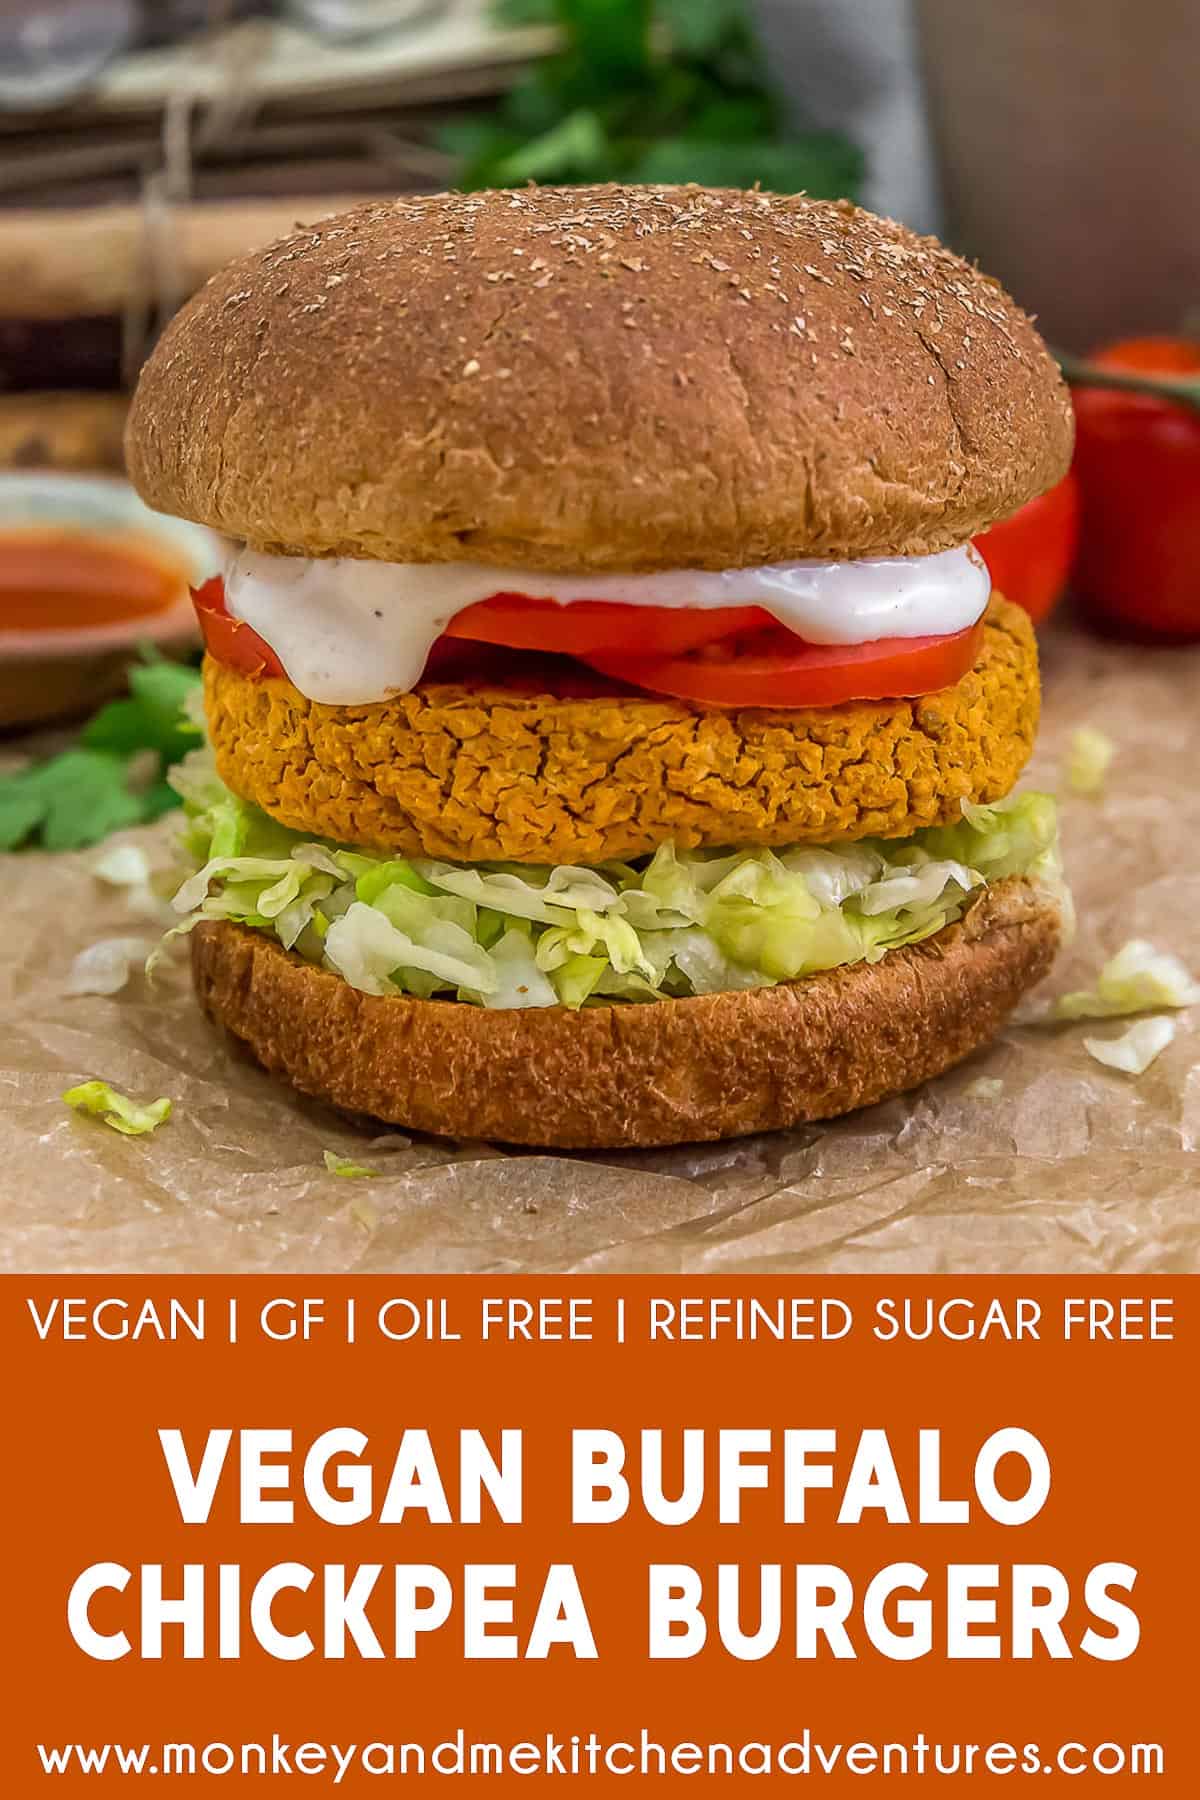 Vegan Buffalo Chickpea Burgers with text description